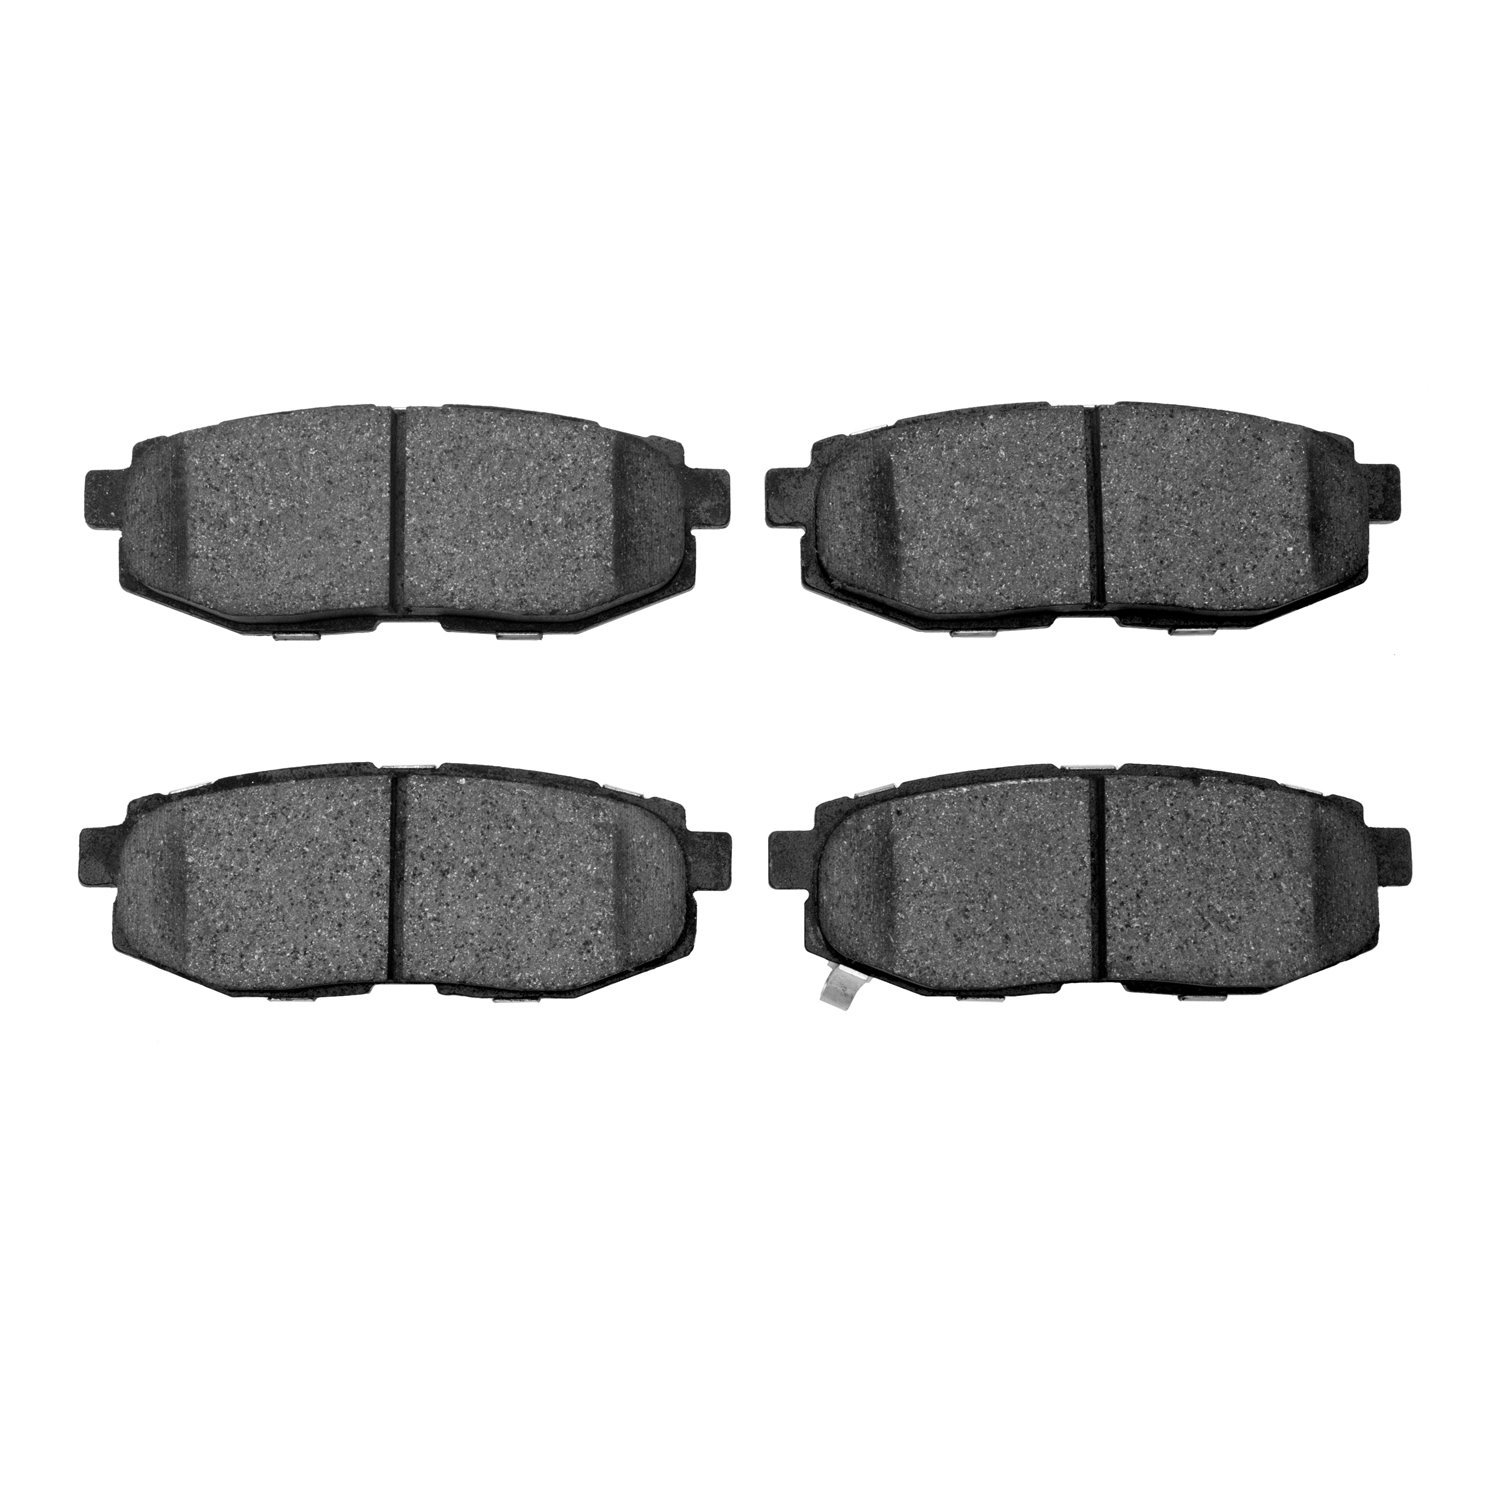 1000-1124-00 Track/Street Low-Metallic Brake Pads Kit, Fits Select Multiple Makes/Models, Position: Rear